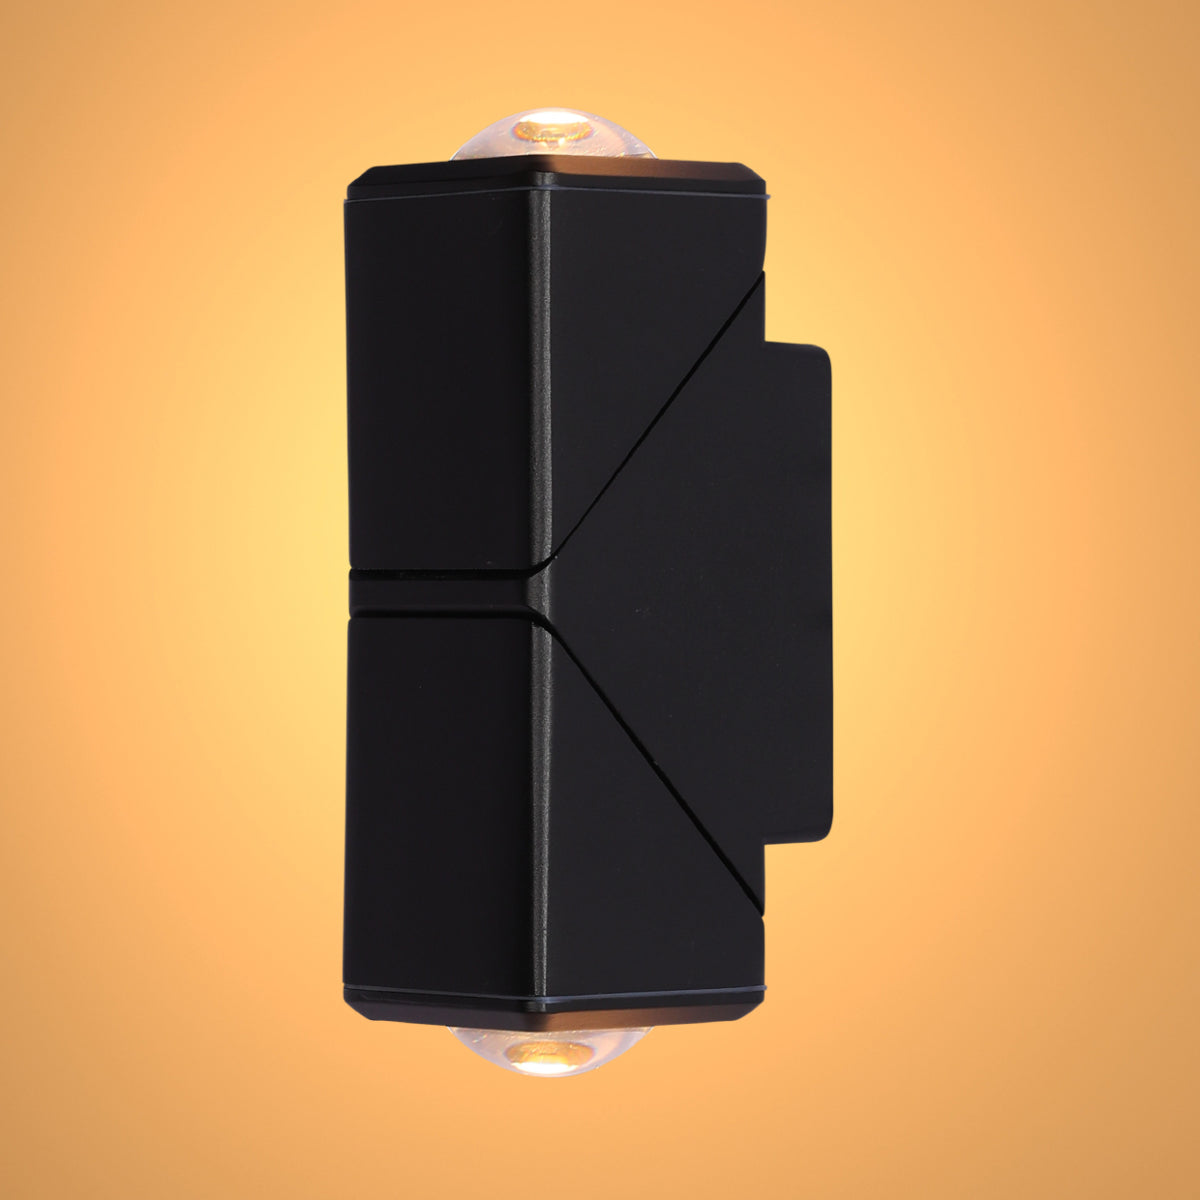 Main image of Rotatable Cubes Outdoor LED Wall Light Black 3000K Narrow Beam 182-03420